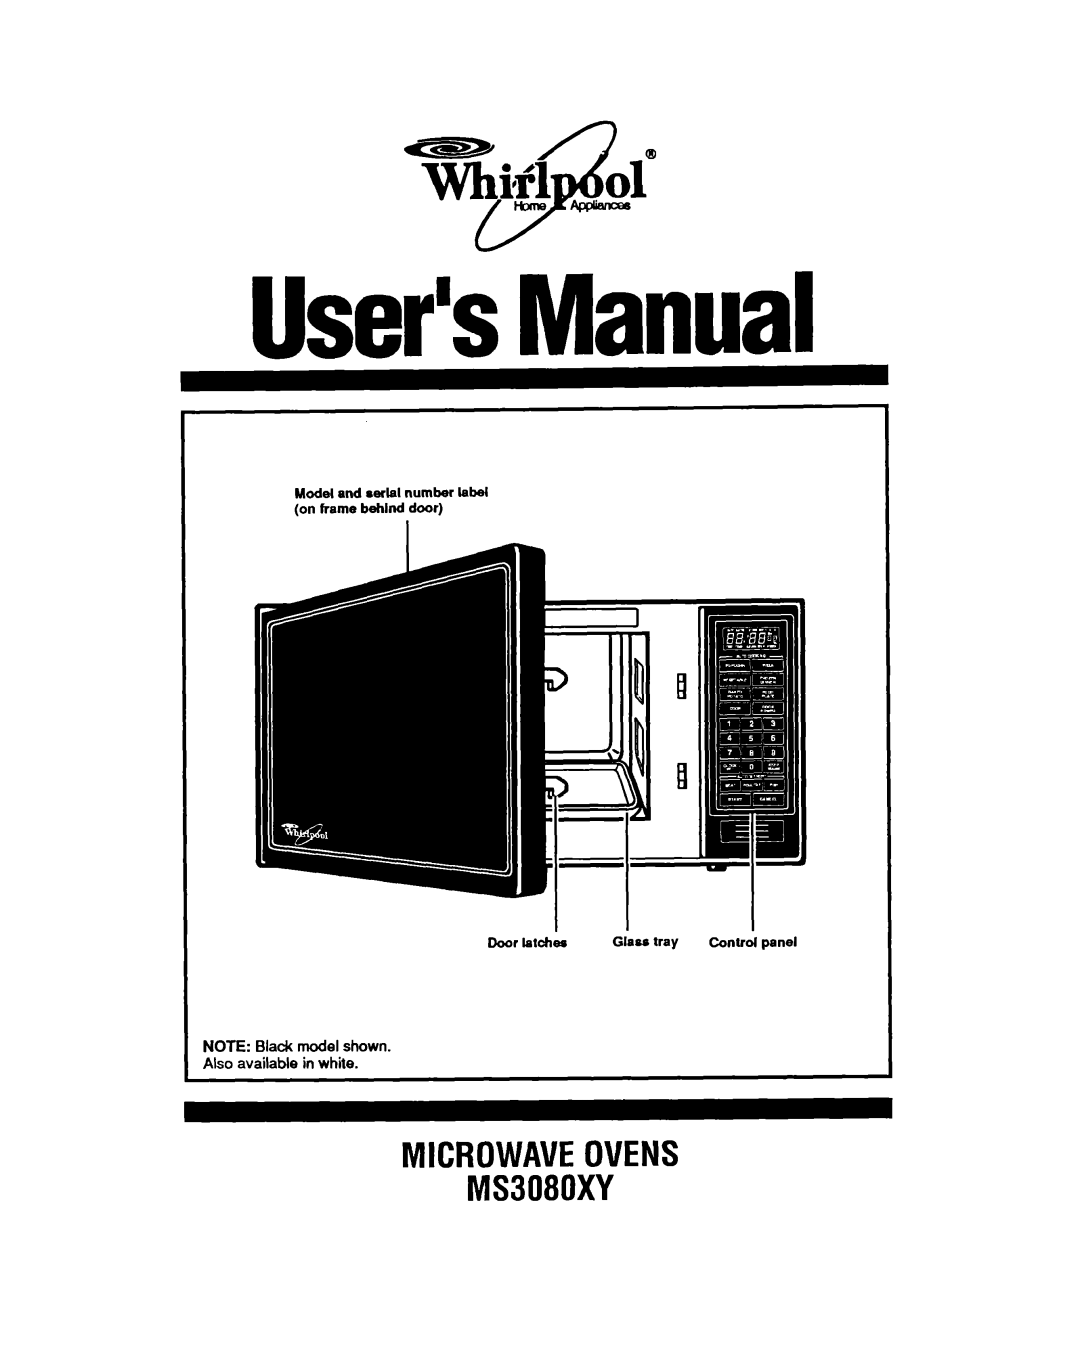 Whirlpool user manual MICROWAVEOVENS MS3080XY, User’sManual 